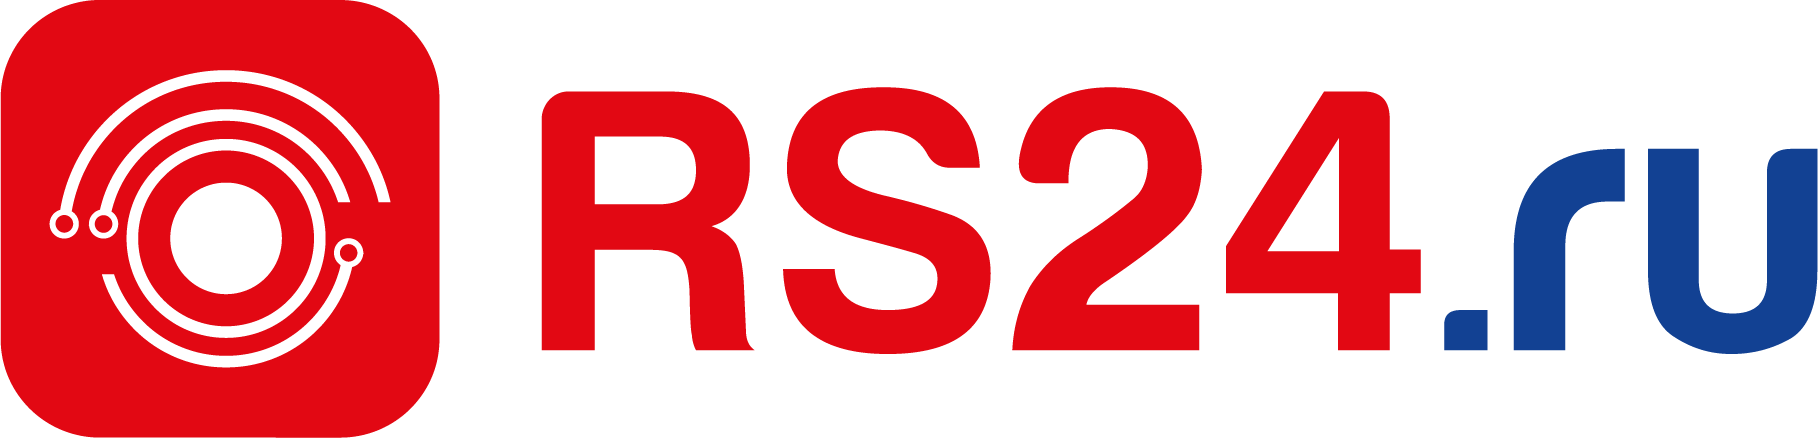 Rs24. Rs24 логотип. Русский свет логотип. RS 24 русский свет.